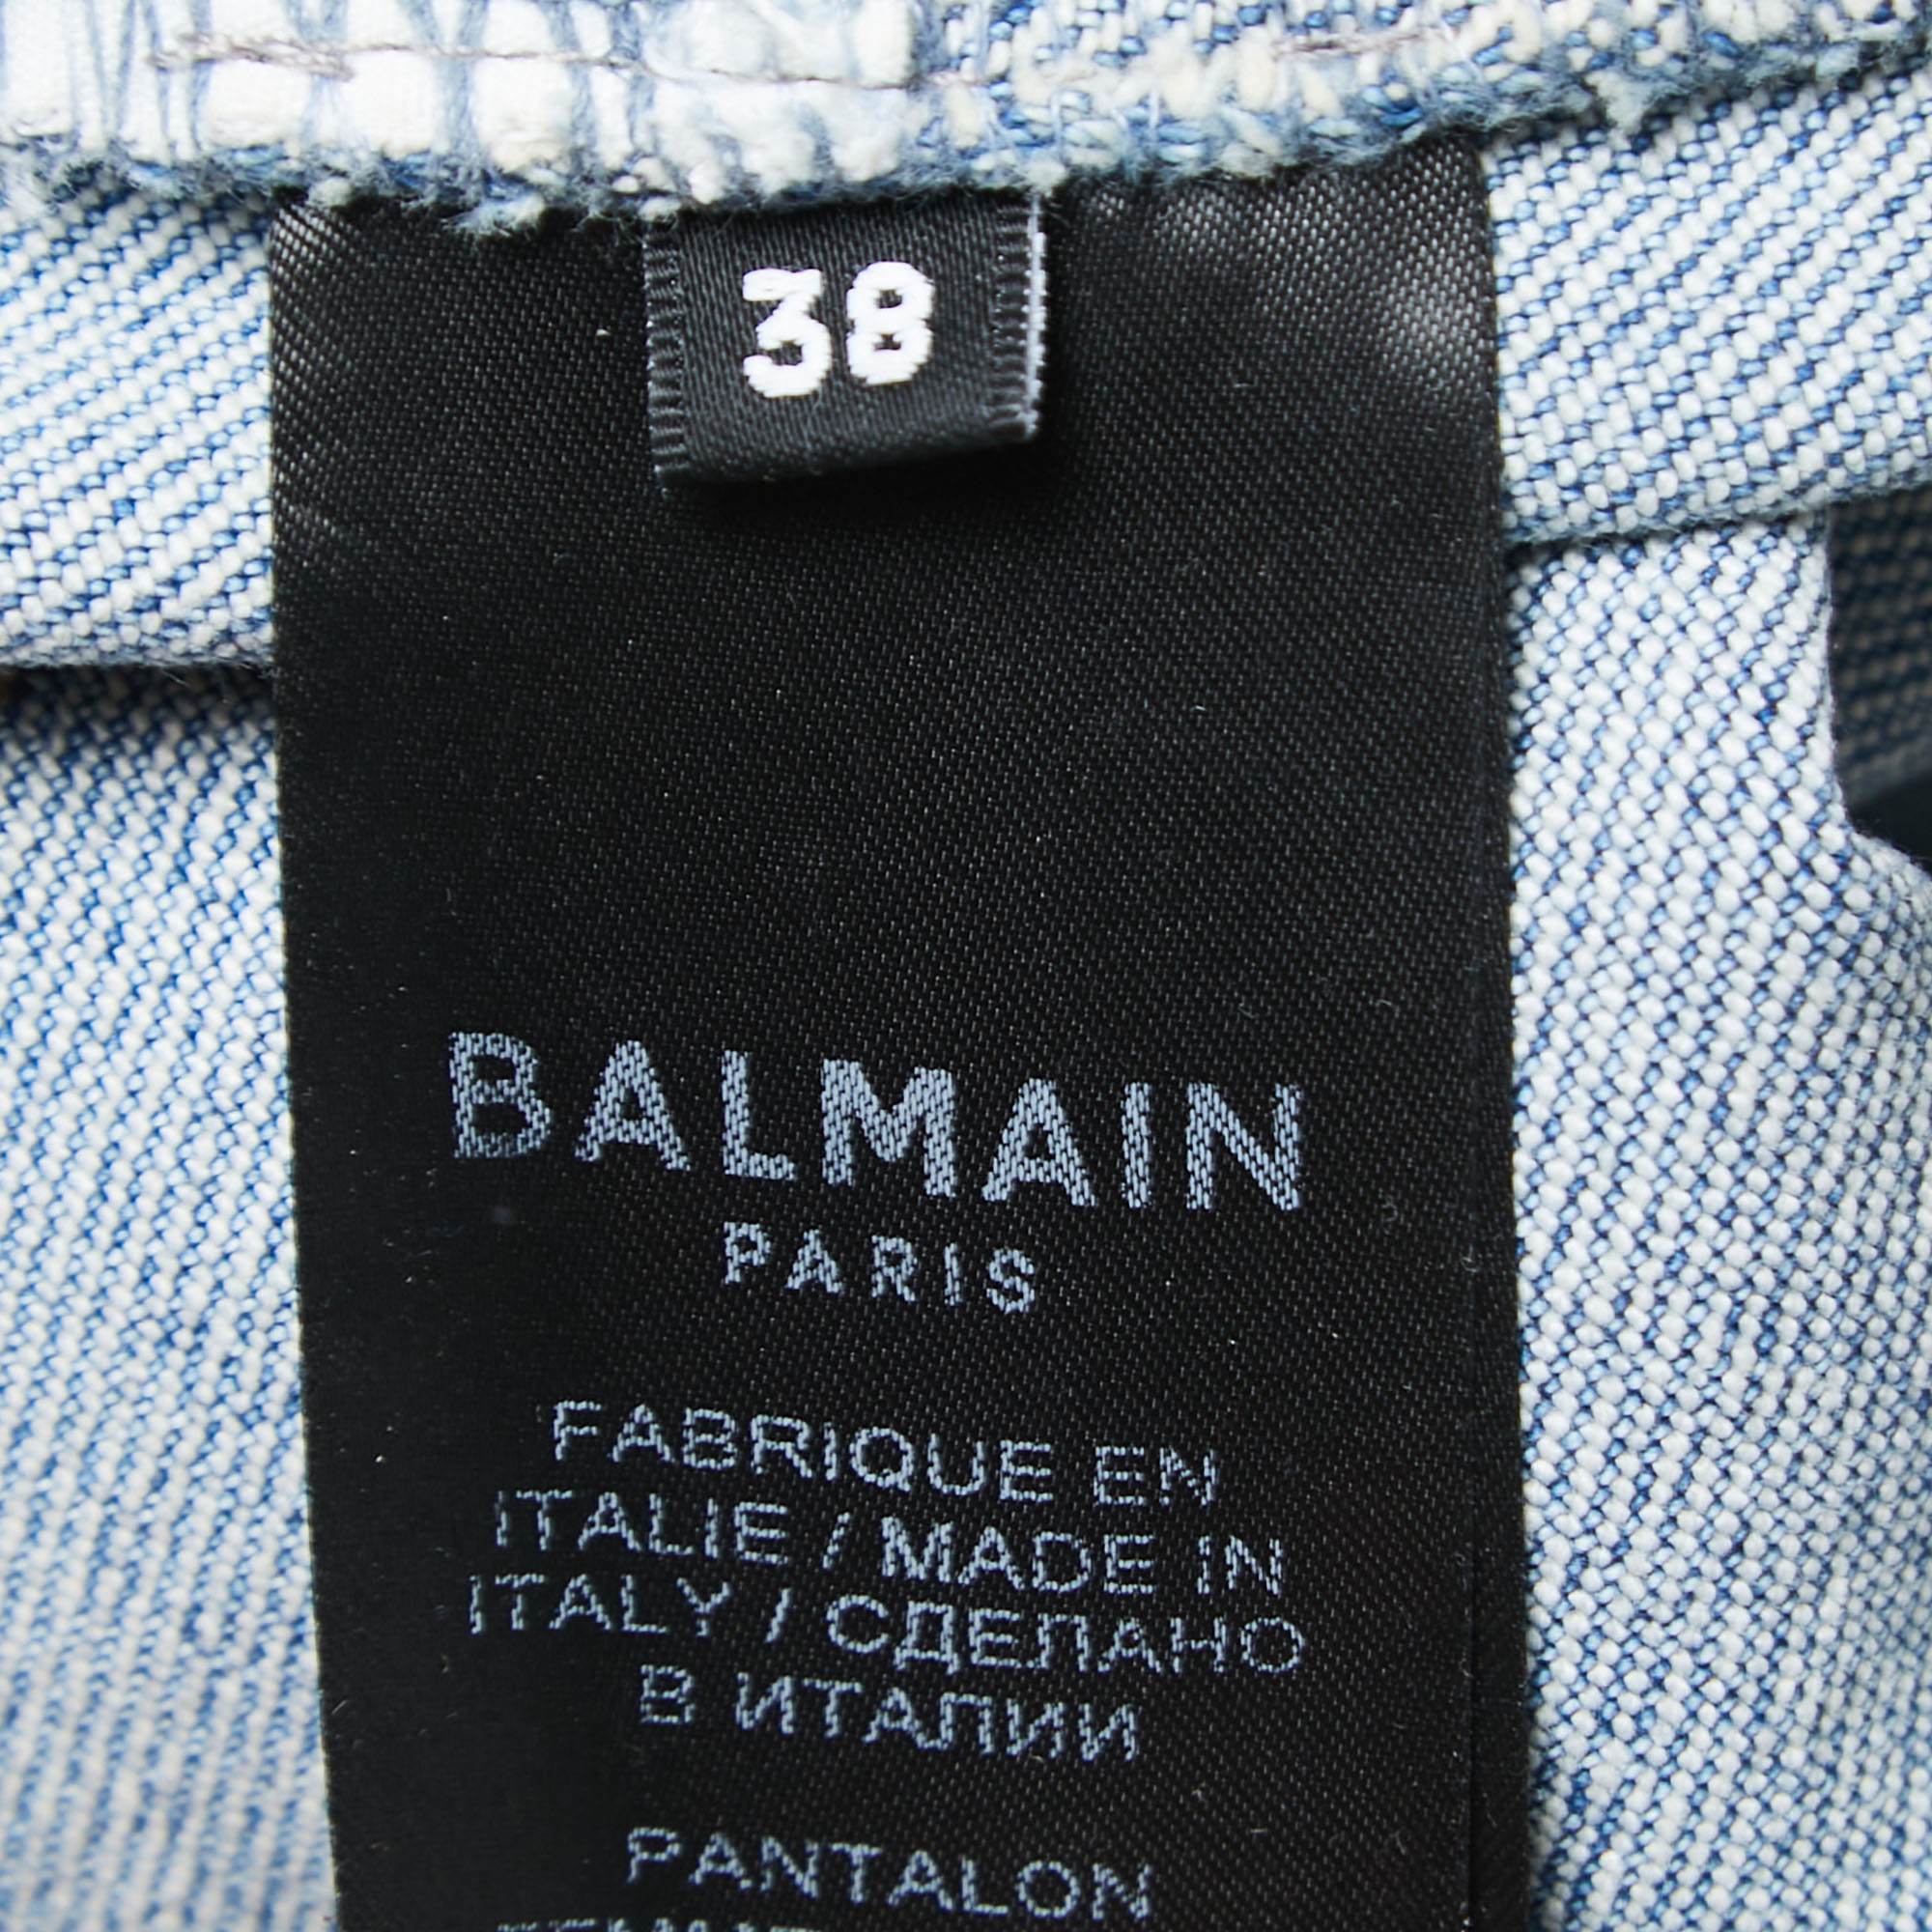 Balmain Blue Denim Quilted Detail Frayed Jeans M Waist 28